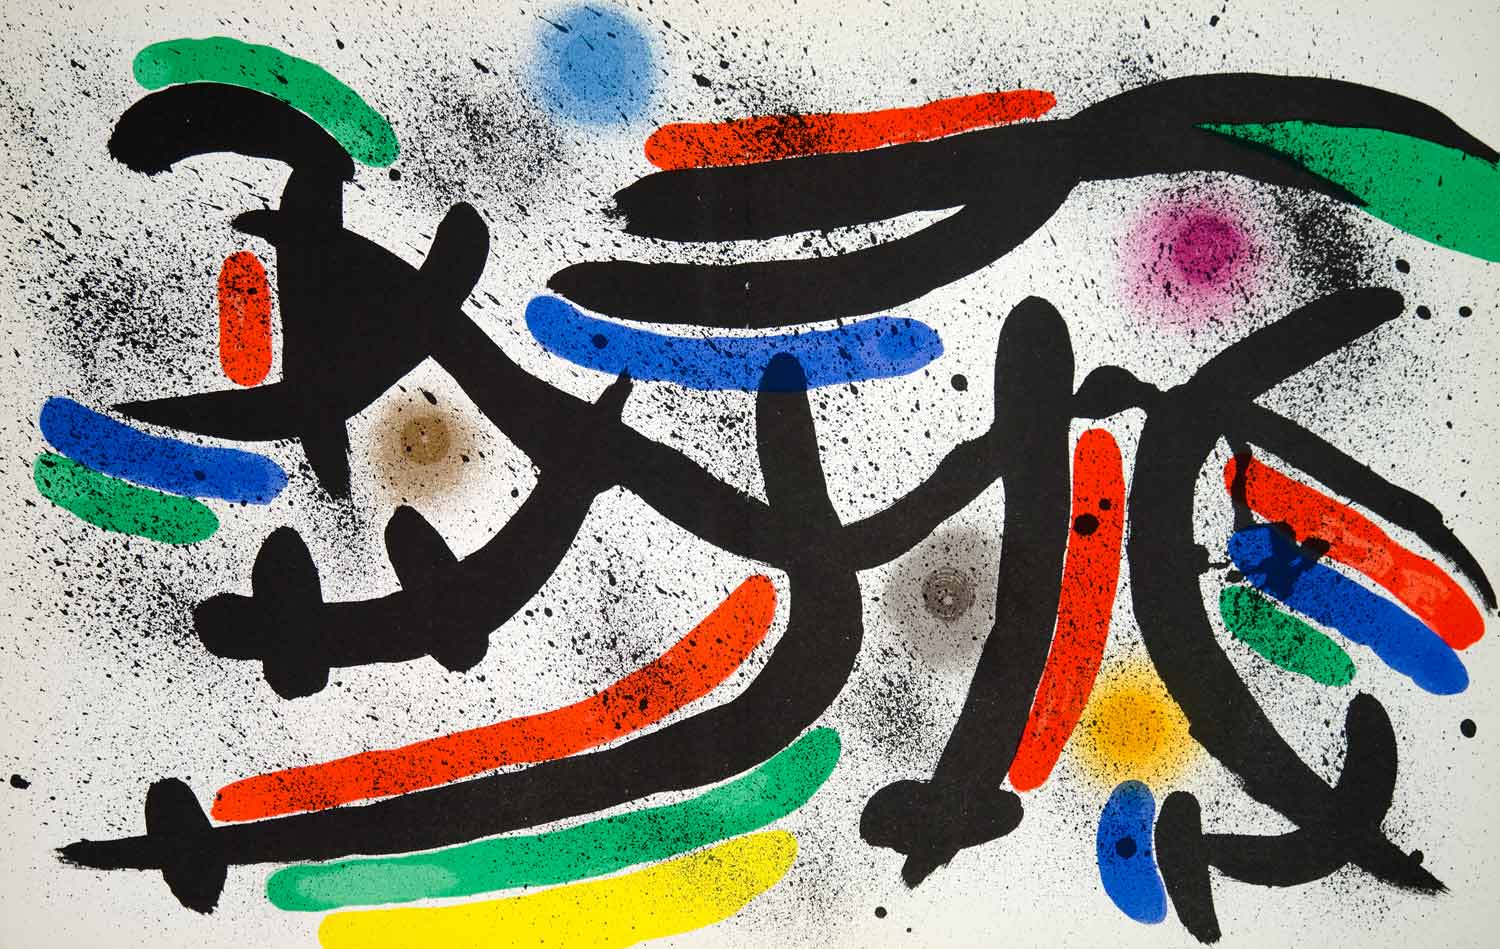 1972 Color Lithograph Joan Miro Litografia IX Shapes Abstract Modern Art Spanish